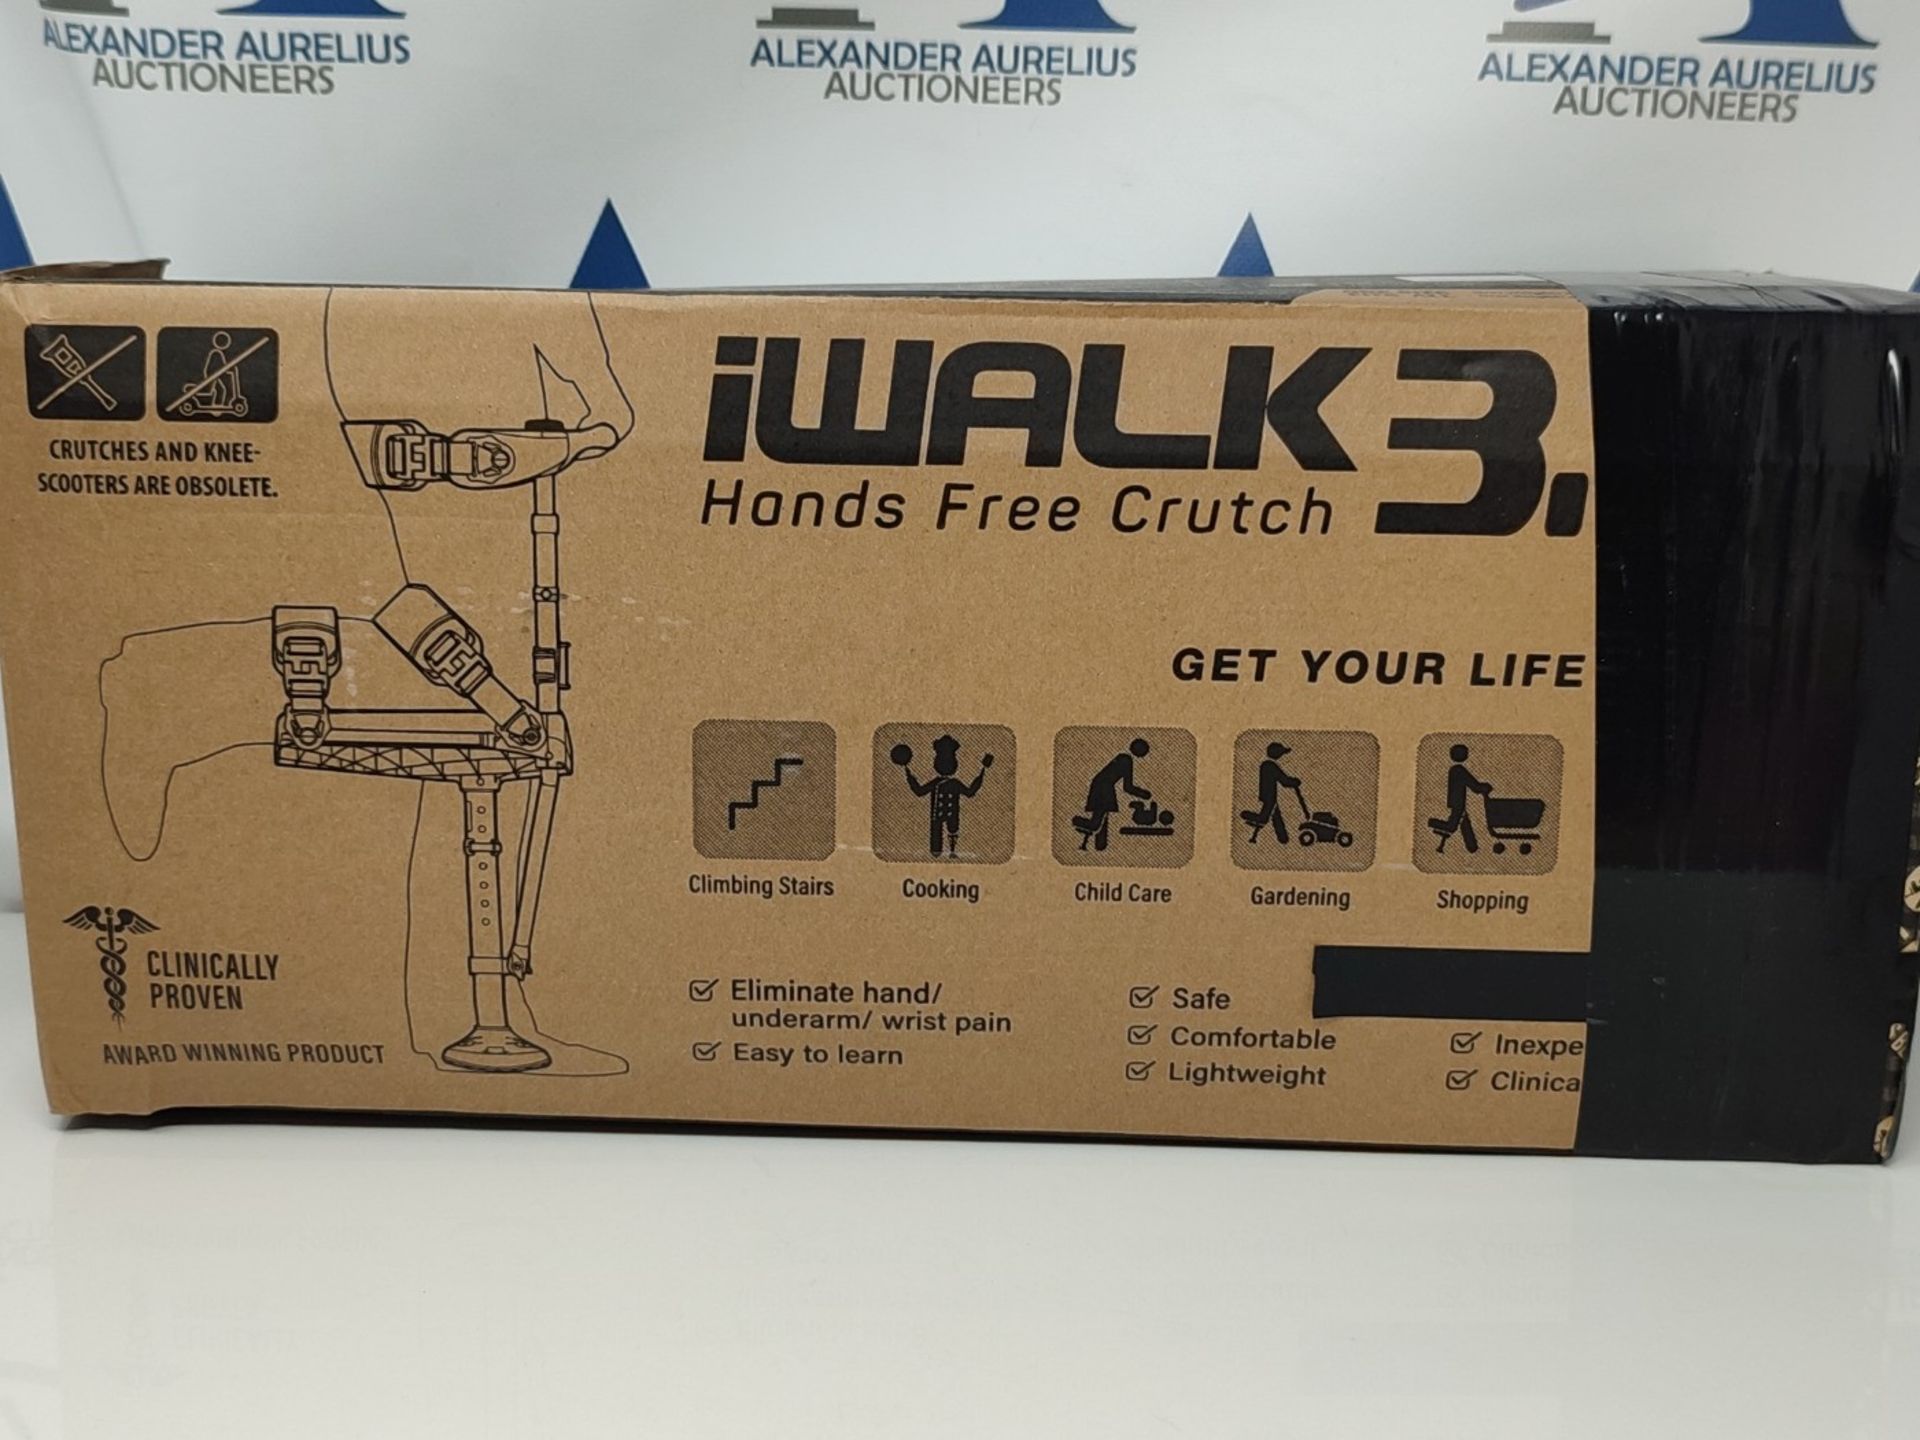 RRP £137.00 iWALK3.0 Hands Free Crutch - Pain Free Knee Crutch - Alternative to Crutches and Knee - Image 2 of 2